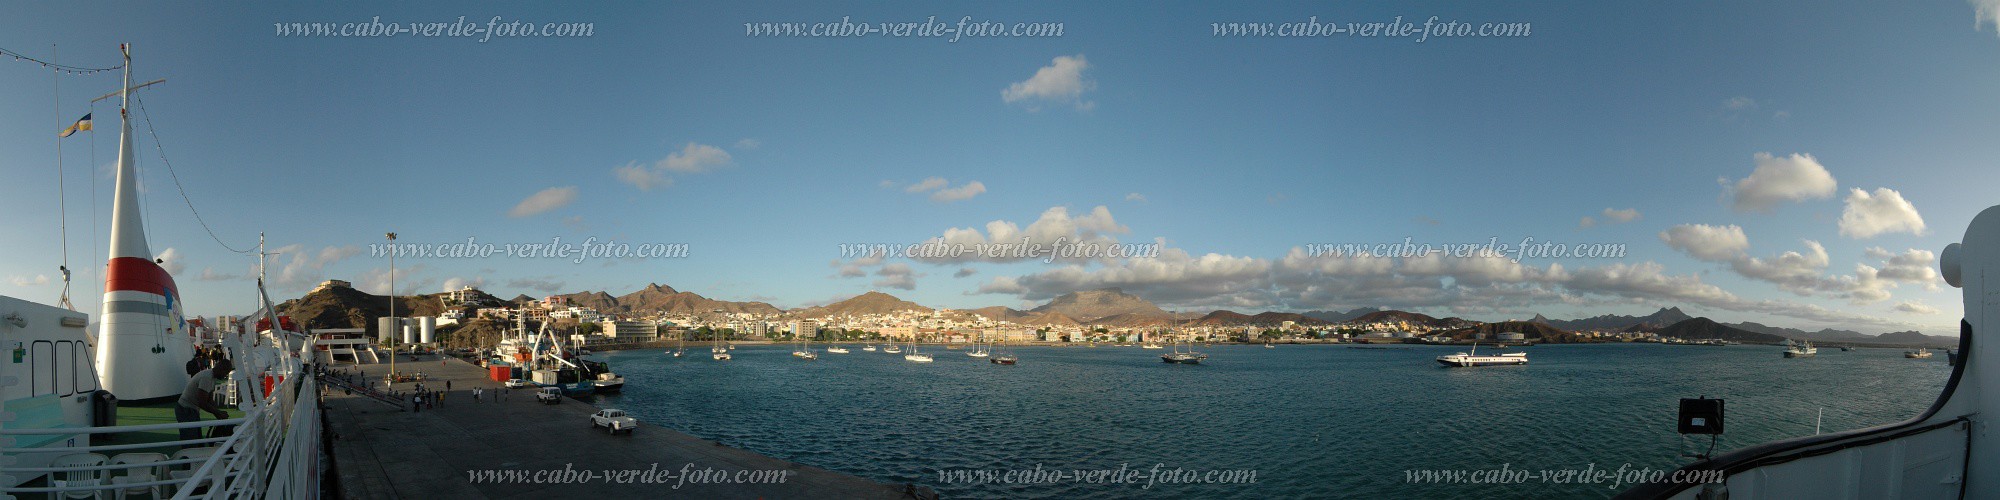 So Vicente : Mindelo : marginal : Landscape SeaCabo Verde Foto Gallery